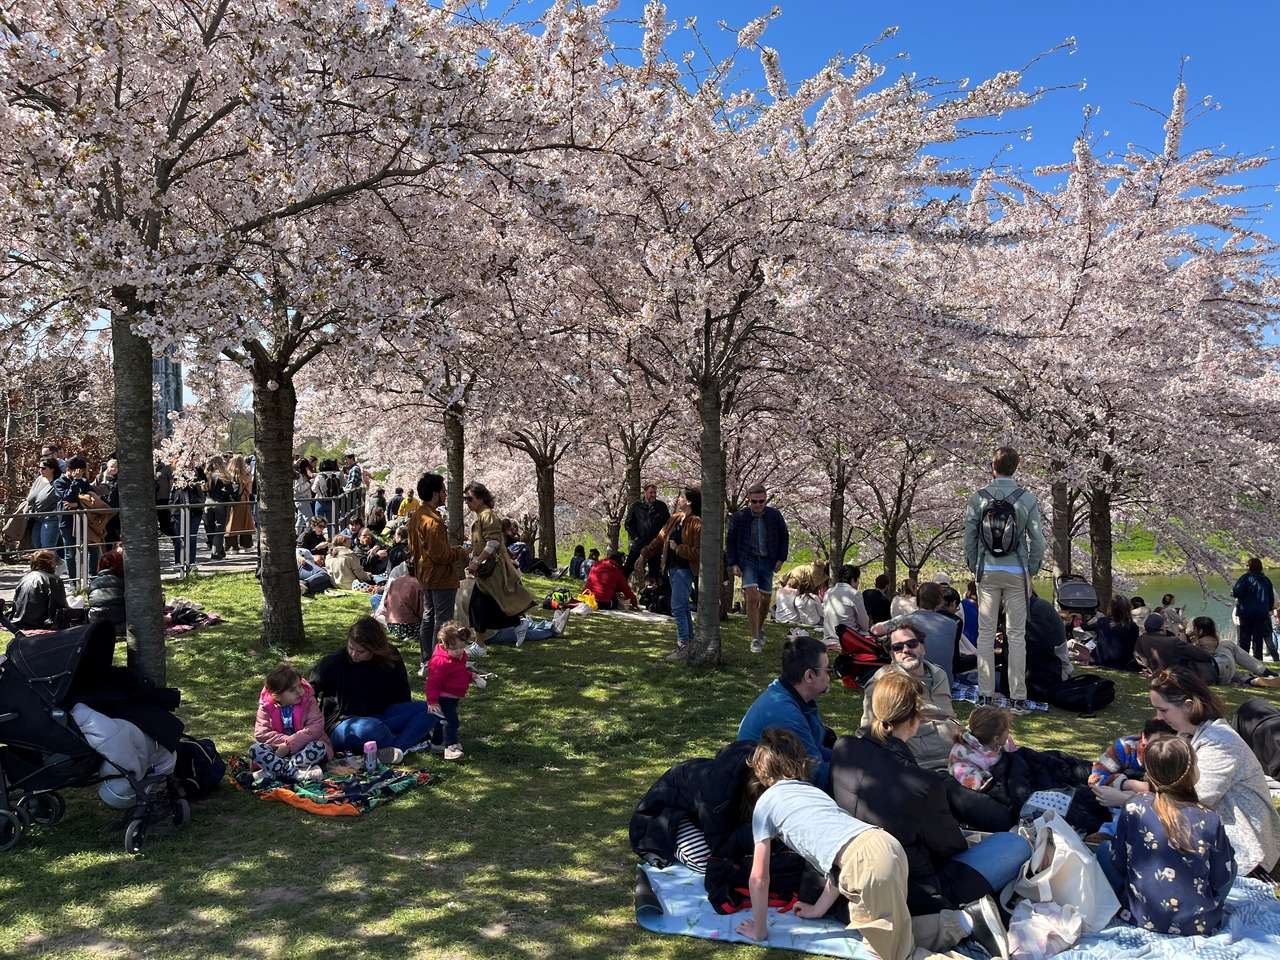 festival de sakura puzzle online a partir de fotografia